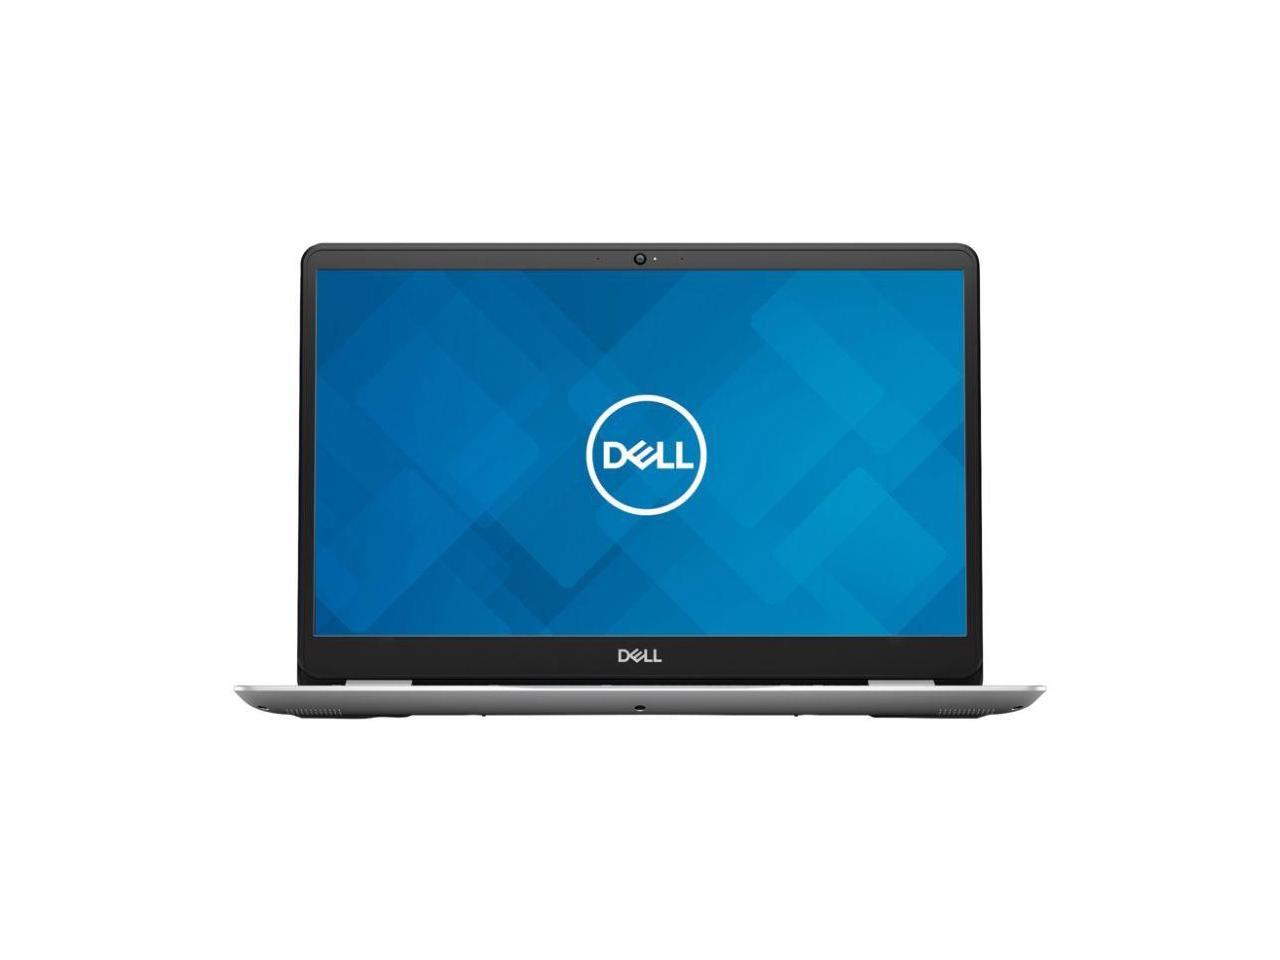 Dell™ Inspiron 15 5584 Laptop, 15.6" Screen, Intel® Core™ i5, 8GB Memory, 256GB Solid State Drive, Windows® 10 Home, I5584-5868SLV-PUS